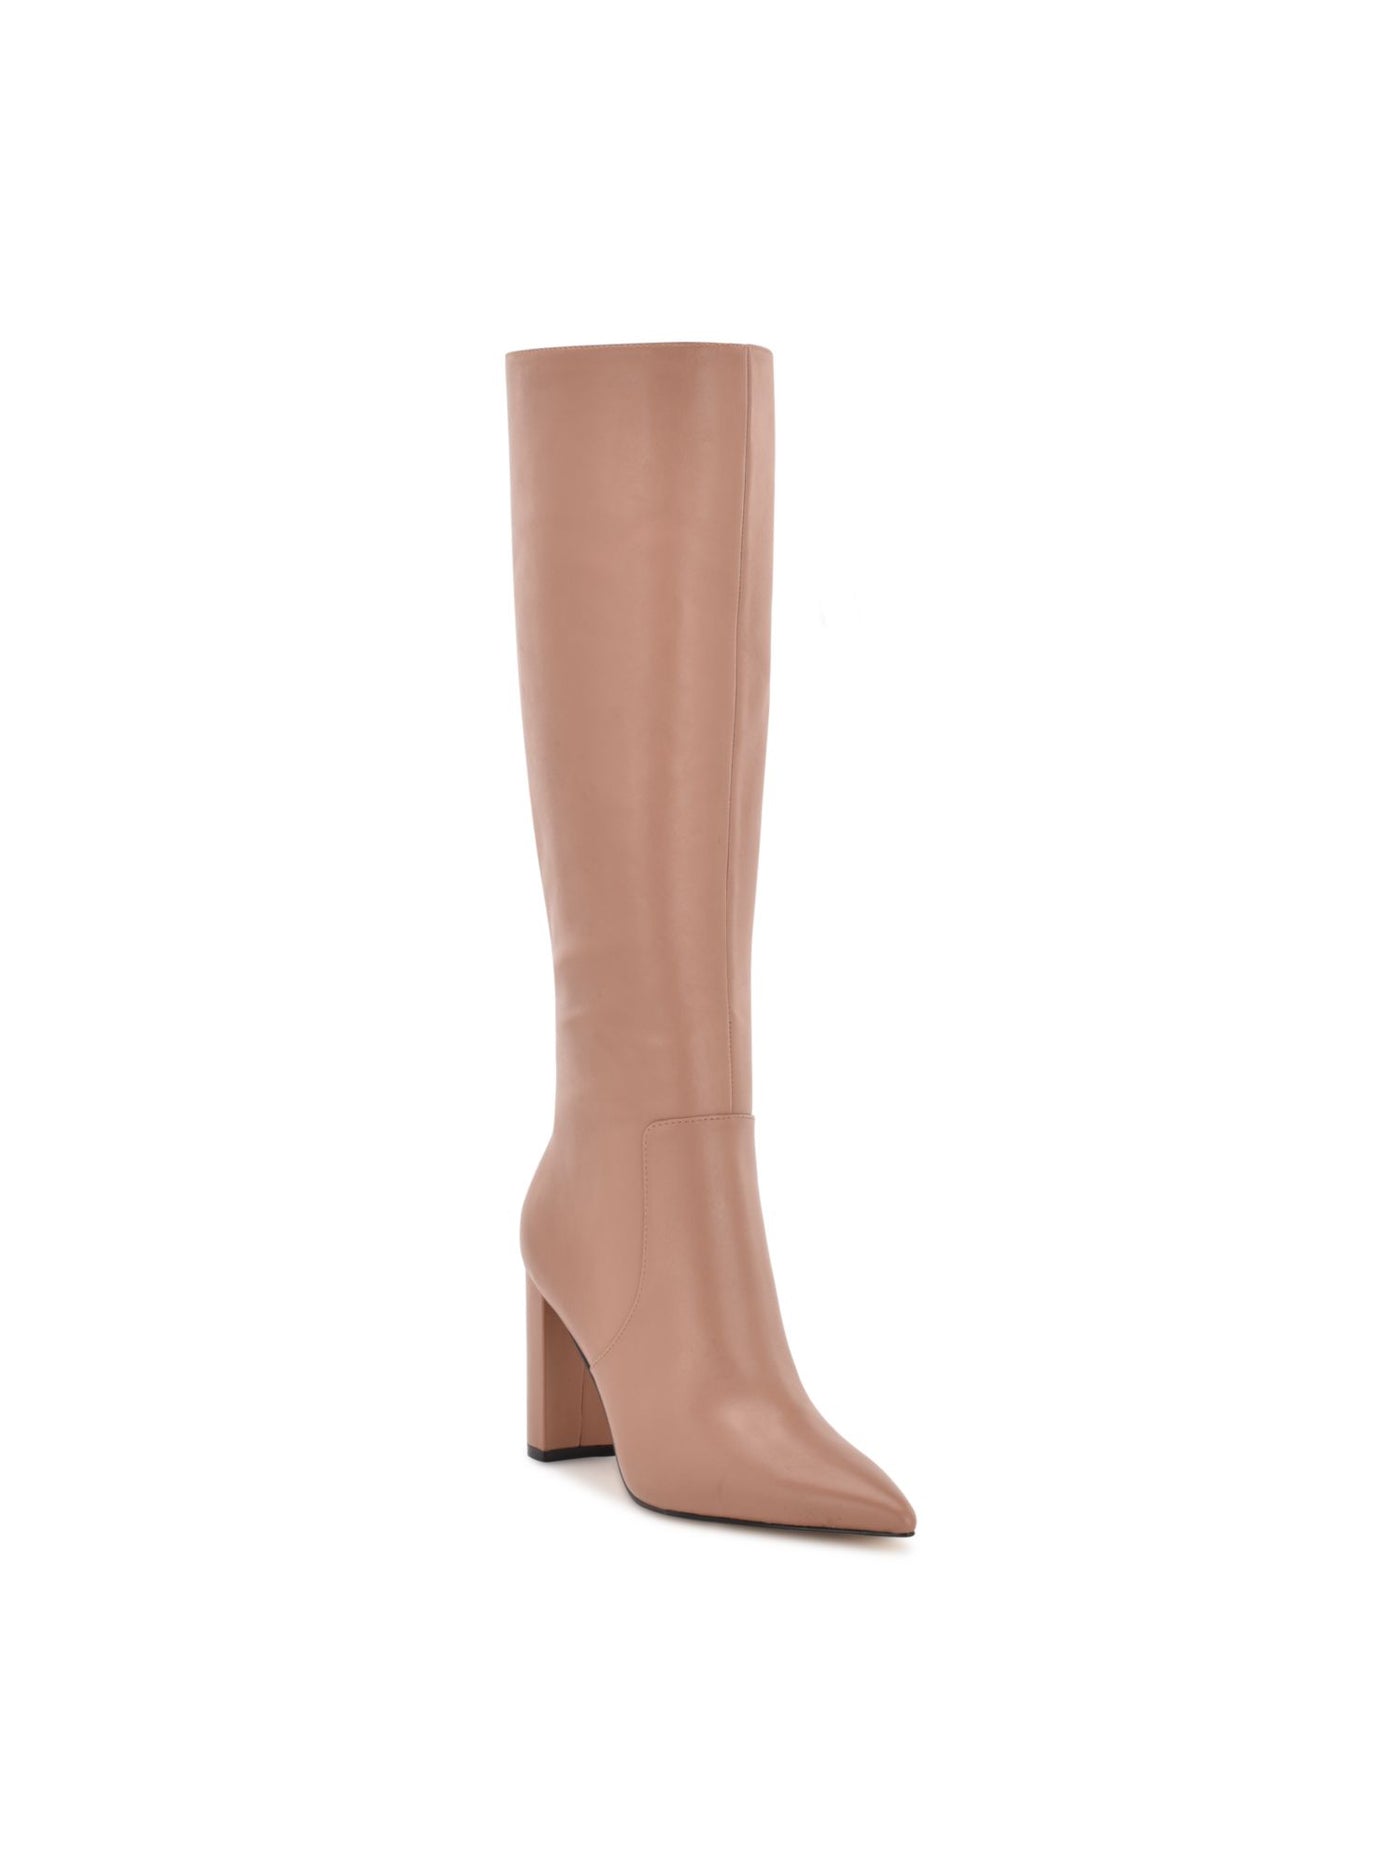 NINE WEST Womens Pink Comfort Danee Pointy Toe Block Heel Zip-Up Leather Boots Shoes 9 M